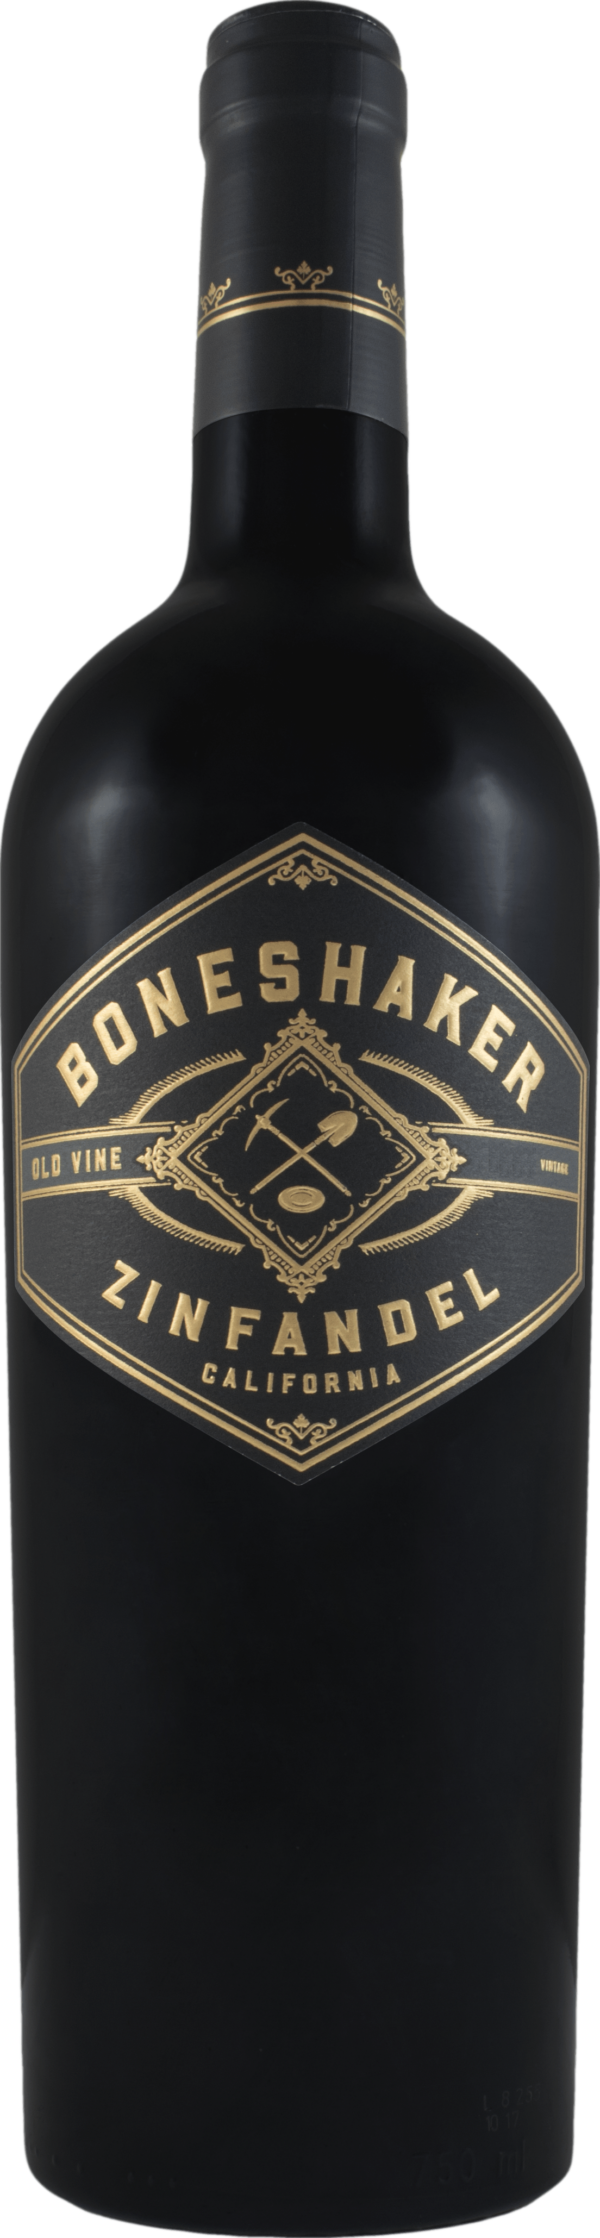 Product image of Boneshaker Zinfandel 2020 from 8wines